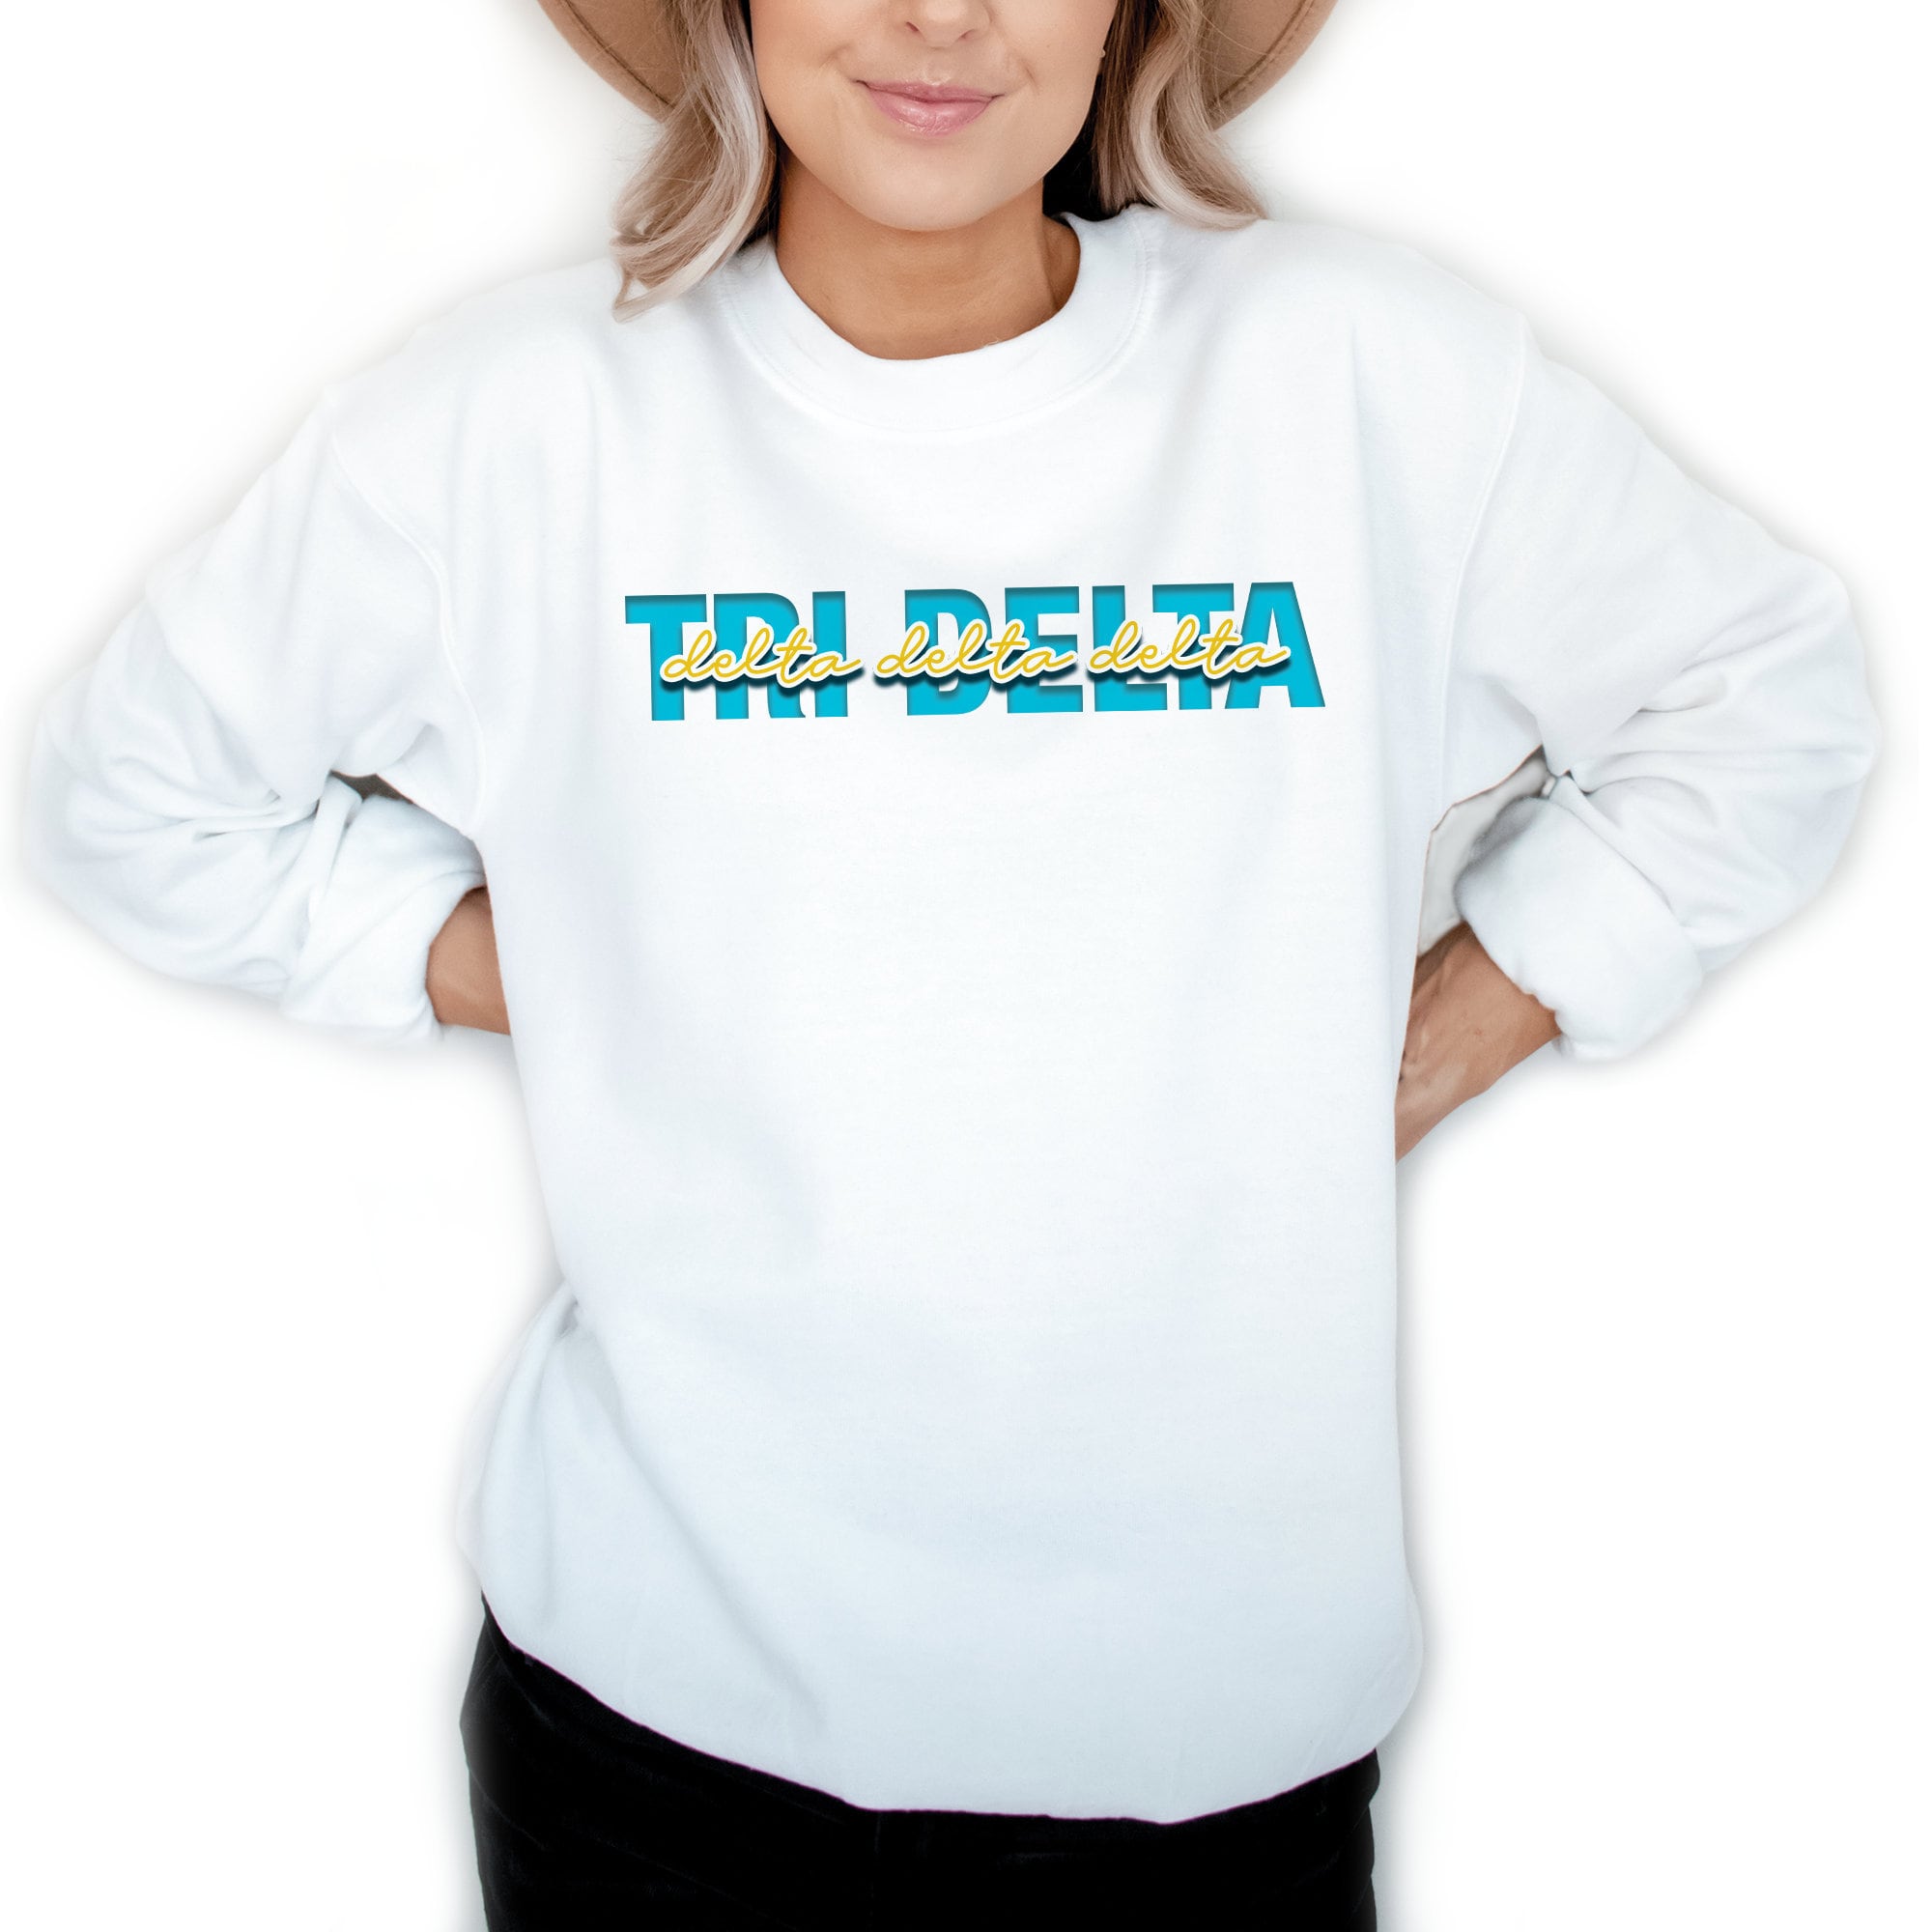 Delta Delta Delta Signature Sweatshirt - Go Greek Chic